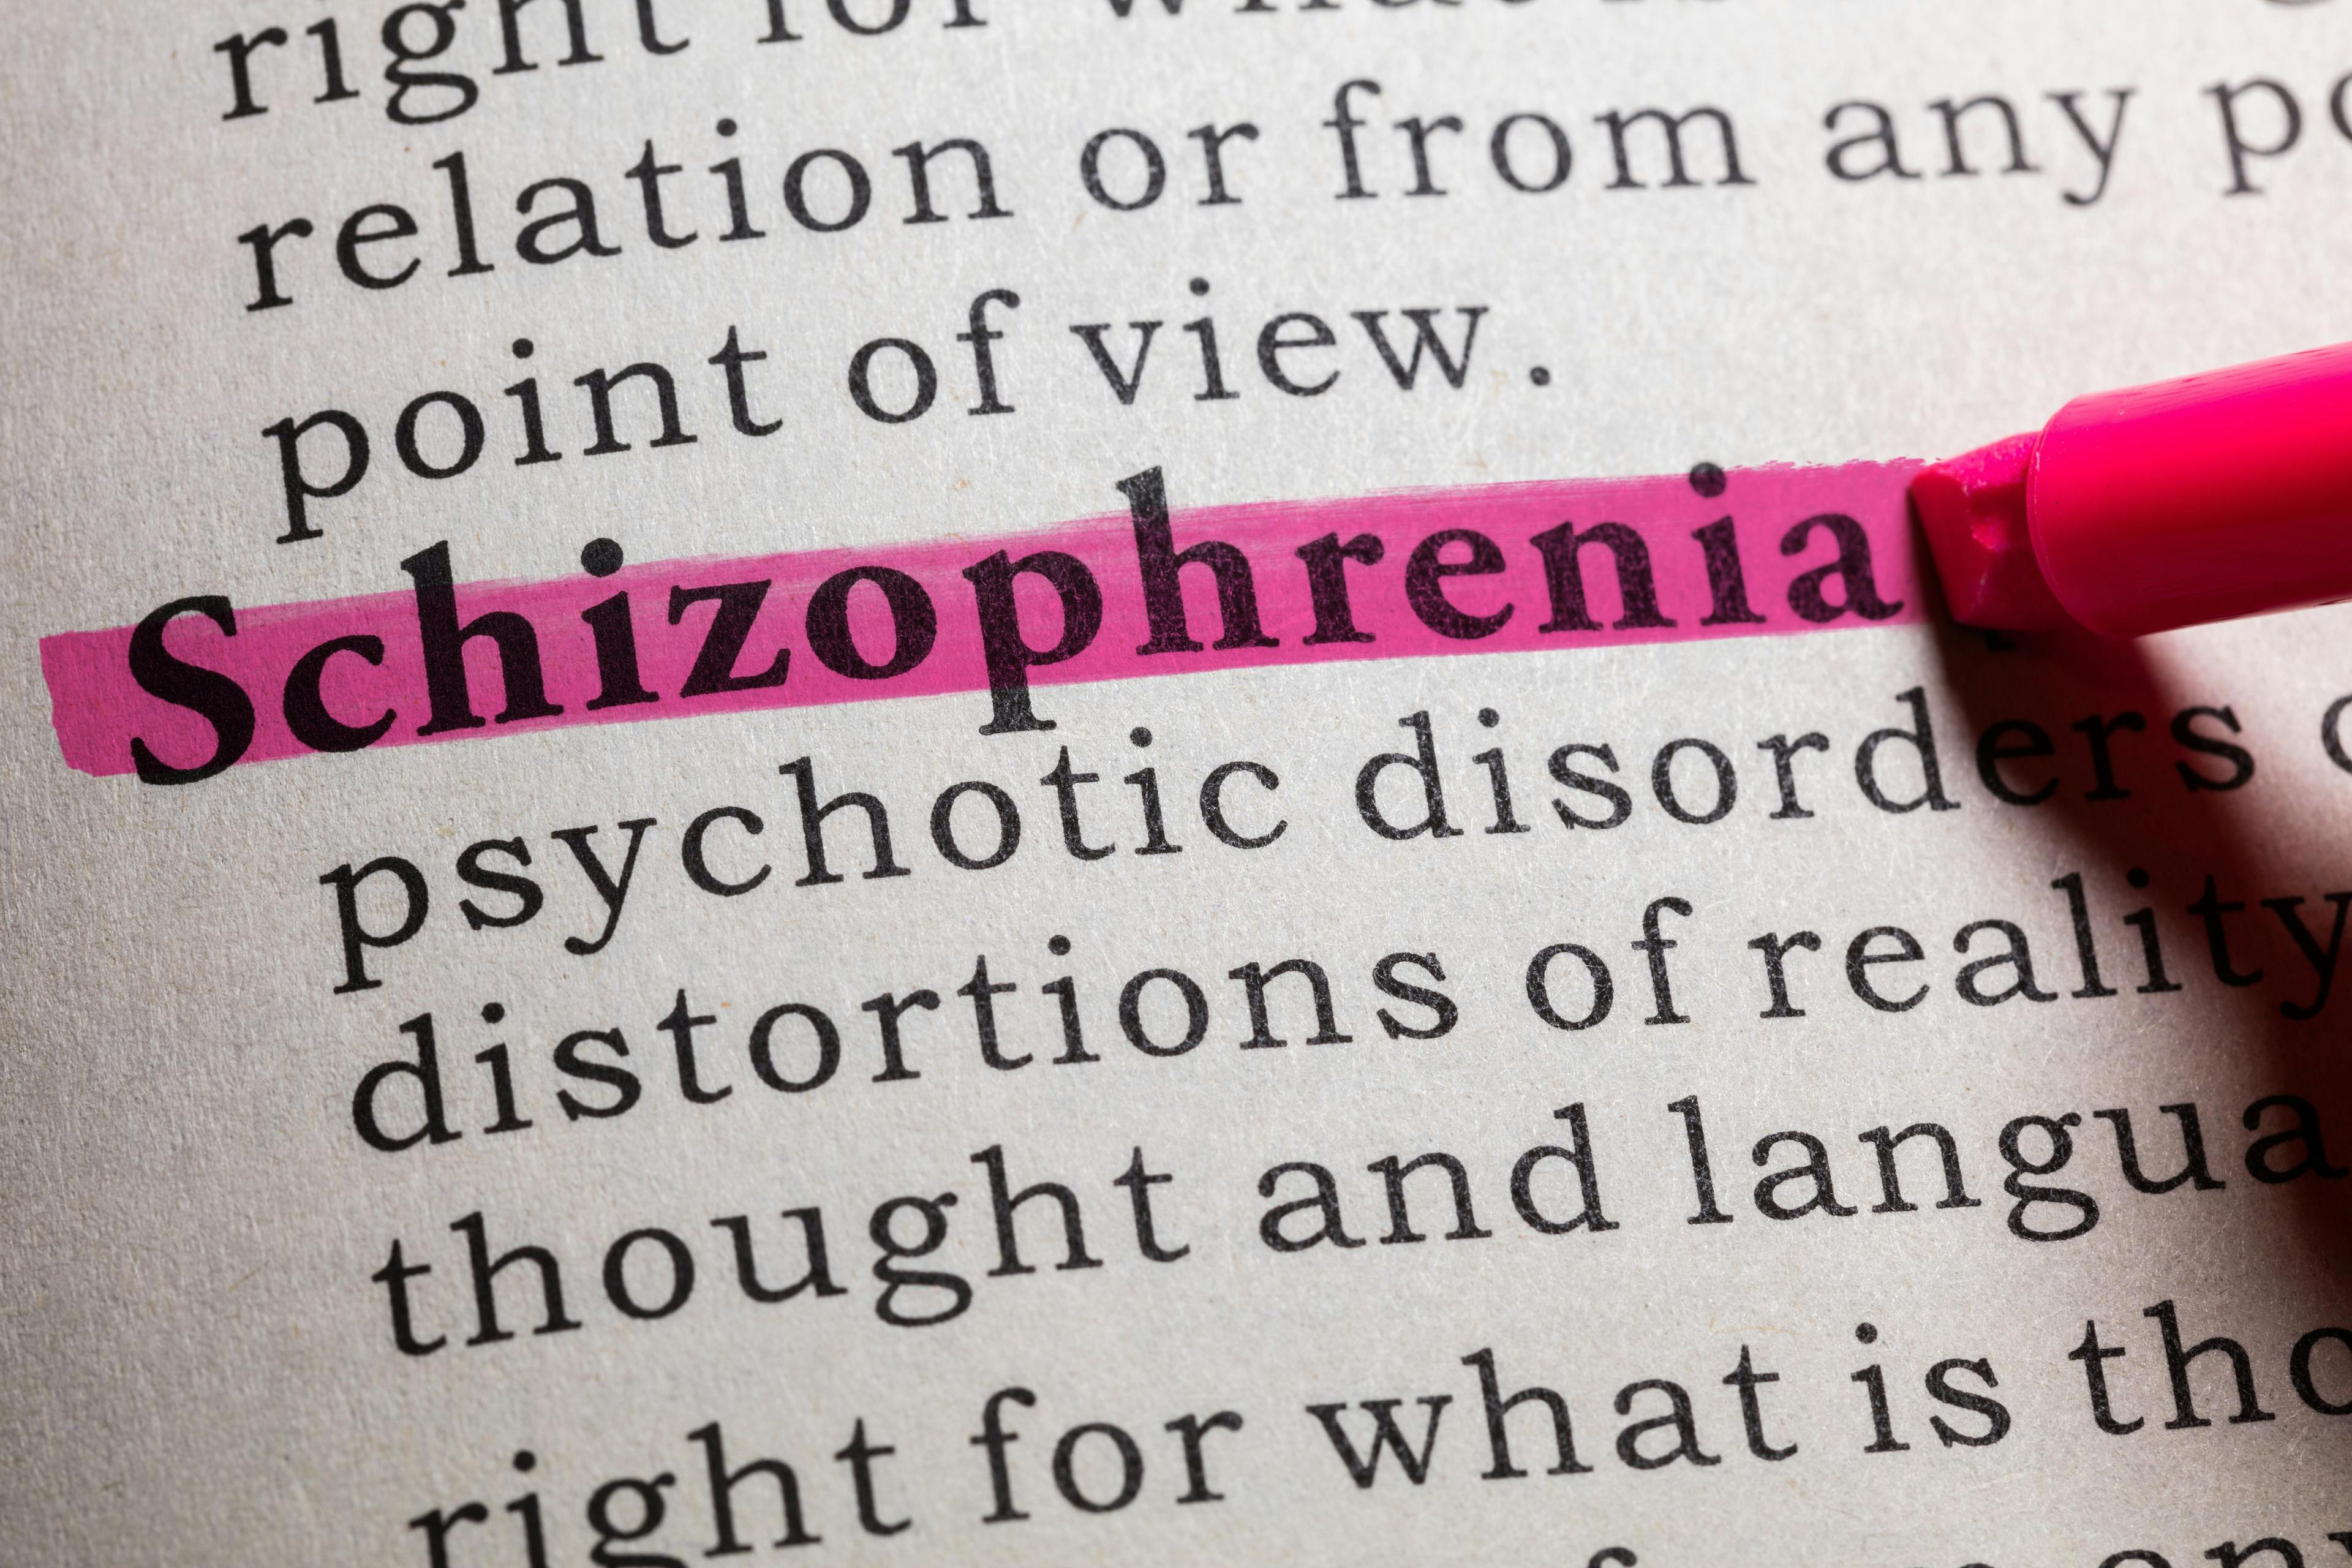 Updates on Brexpiprazole for Pediatric Patients With Schizophrenia